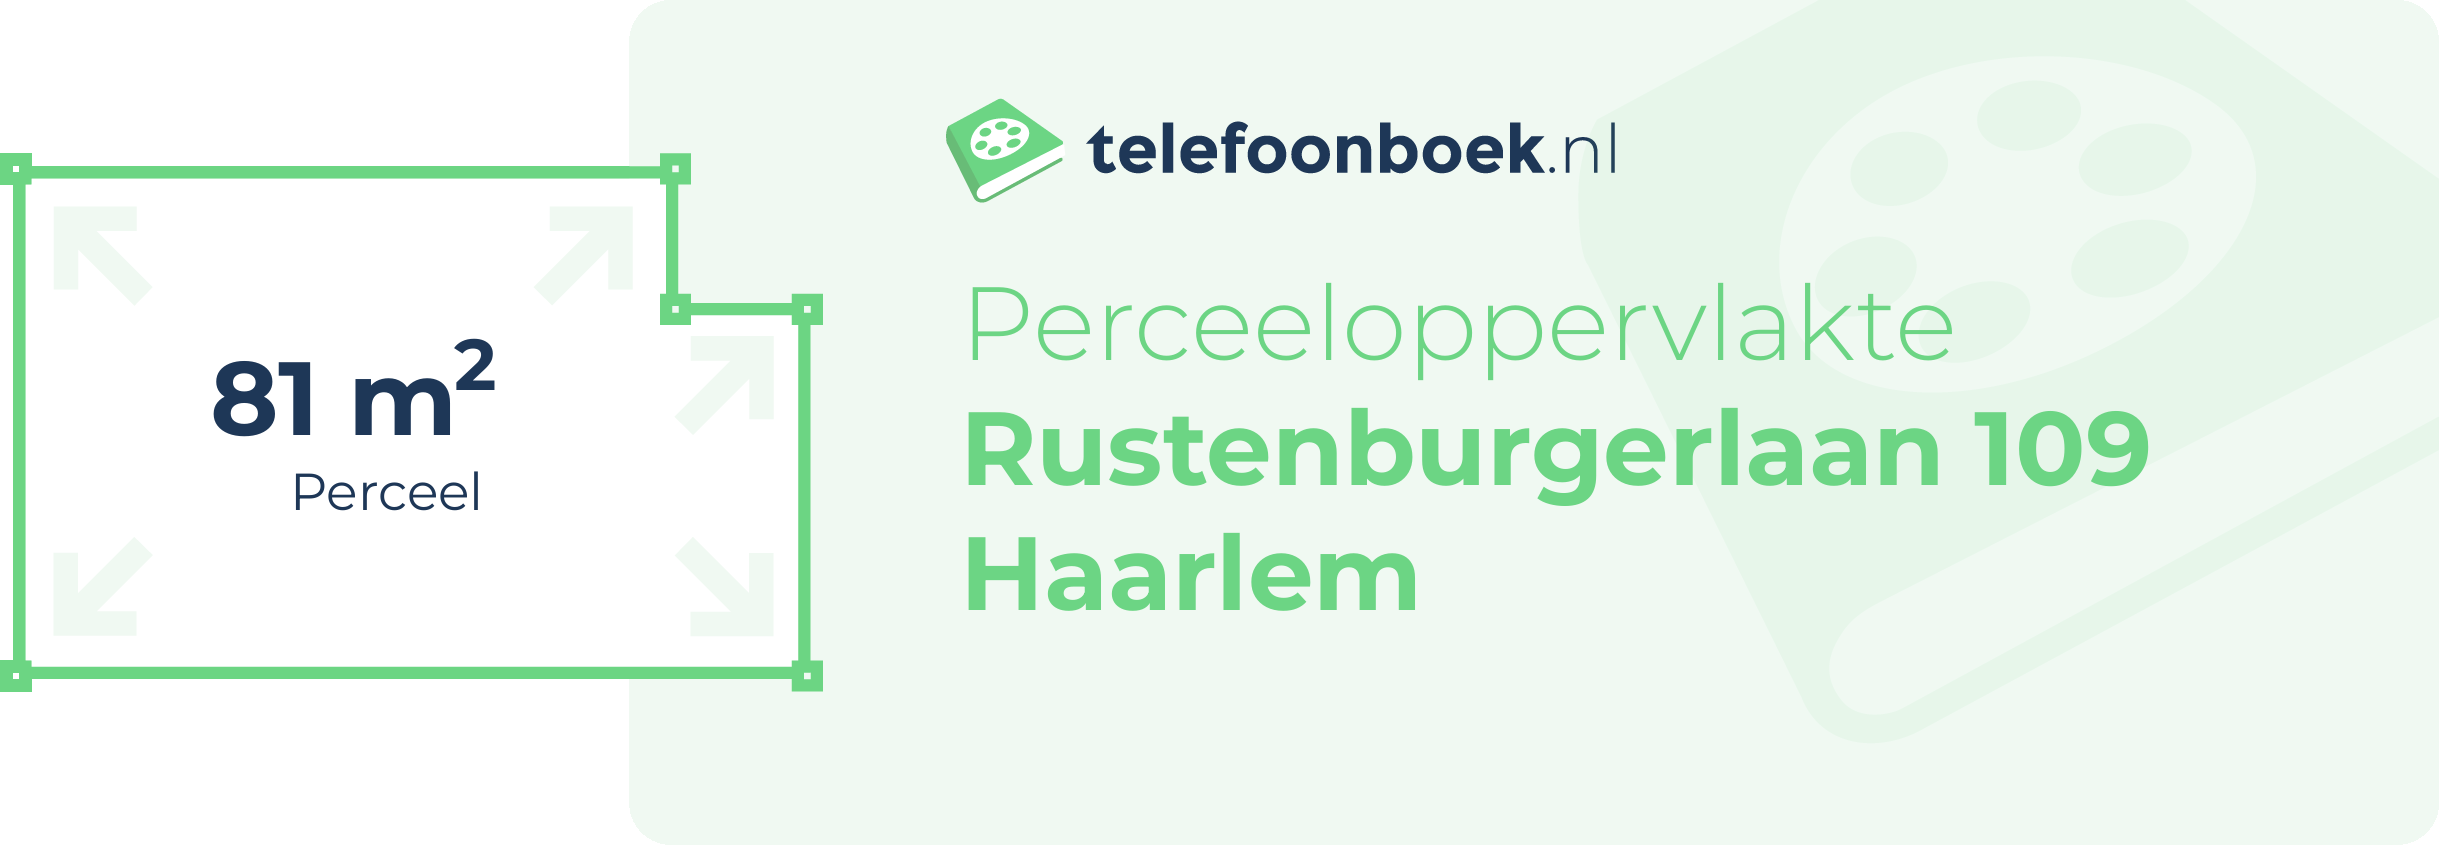 Perceeloppervlakte Rustenburgerlaan 109 Haarlem